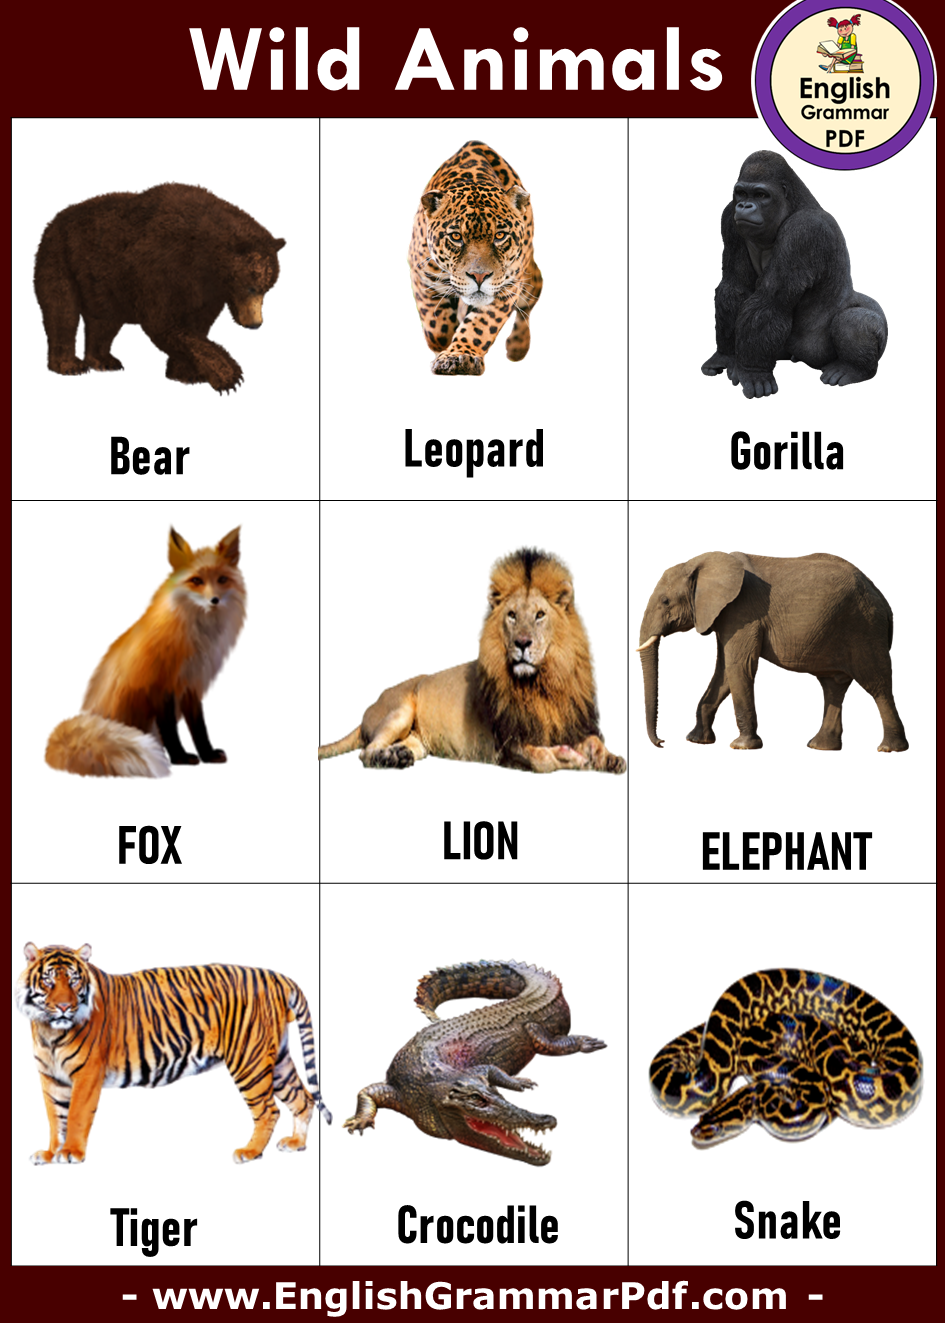 10 Wild Animals Name, Wild Animals in English